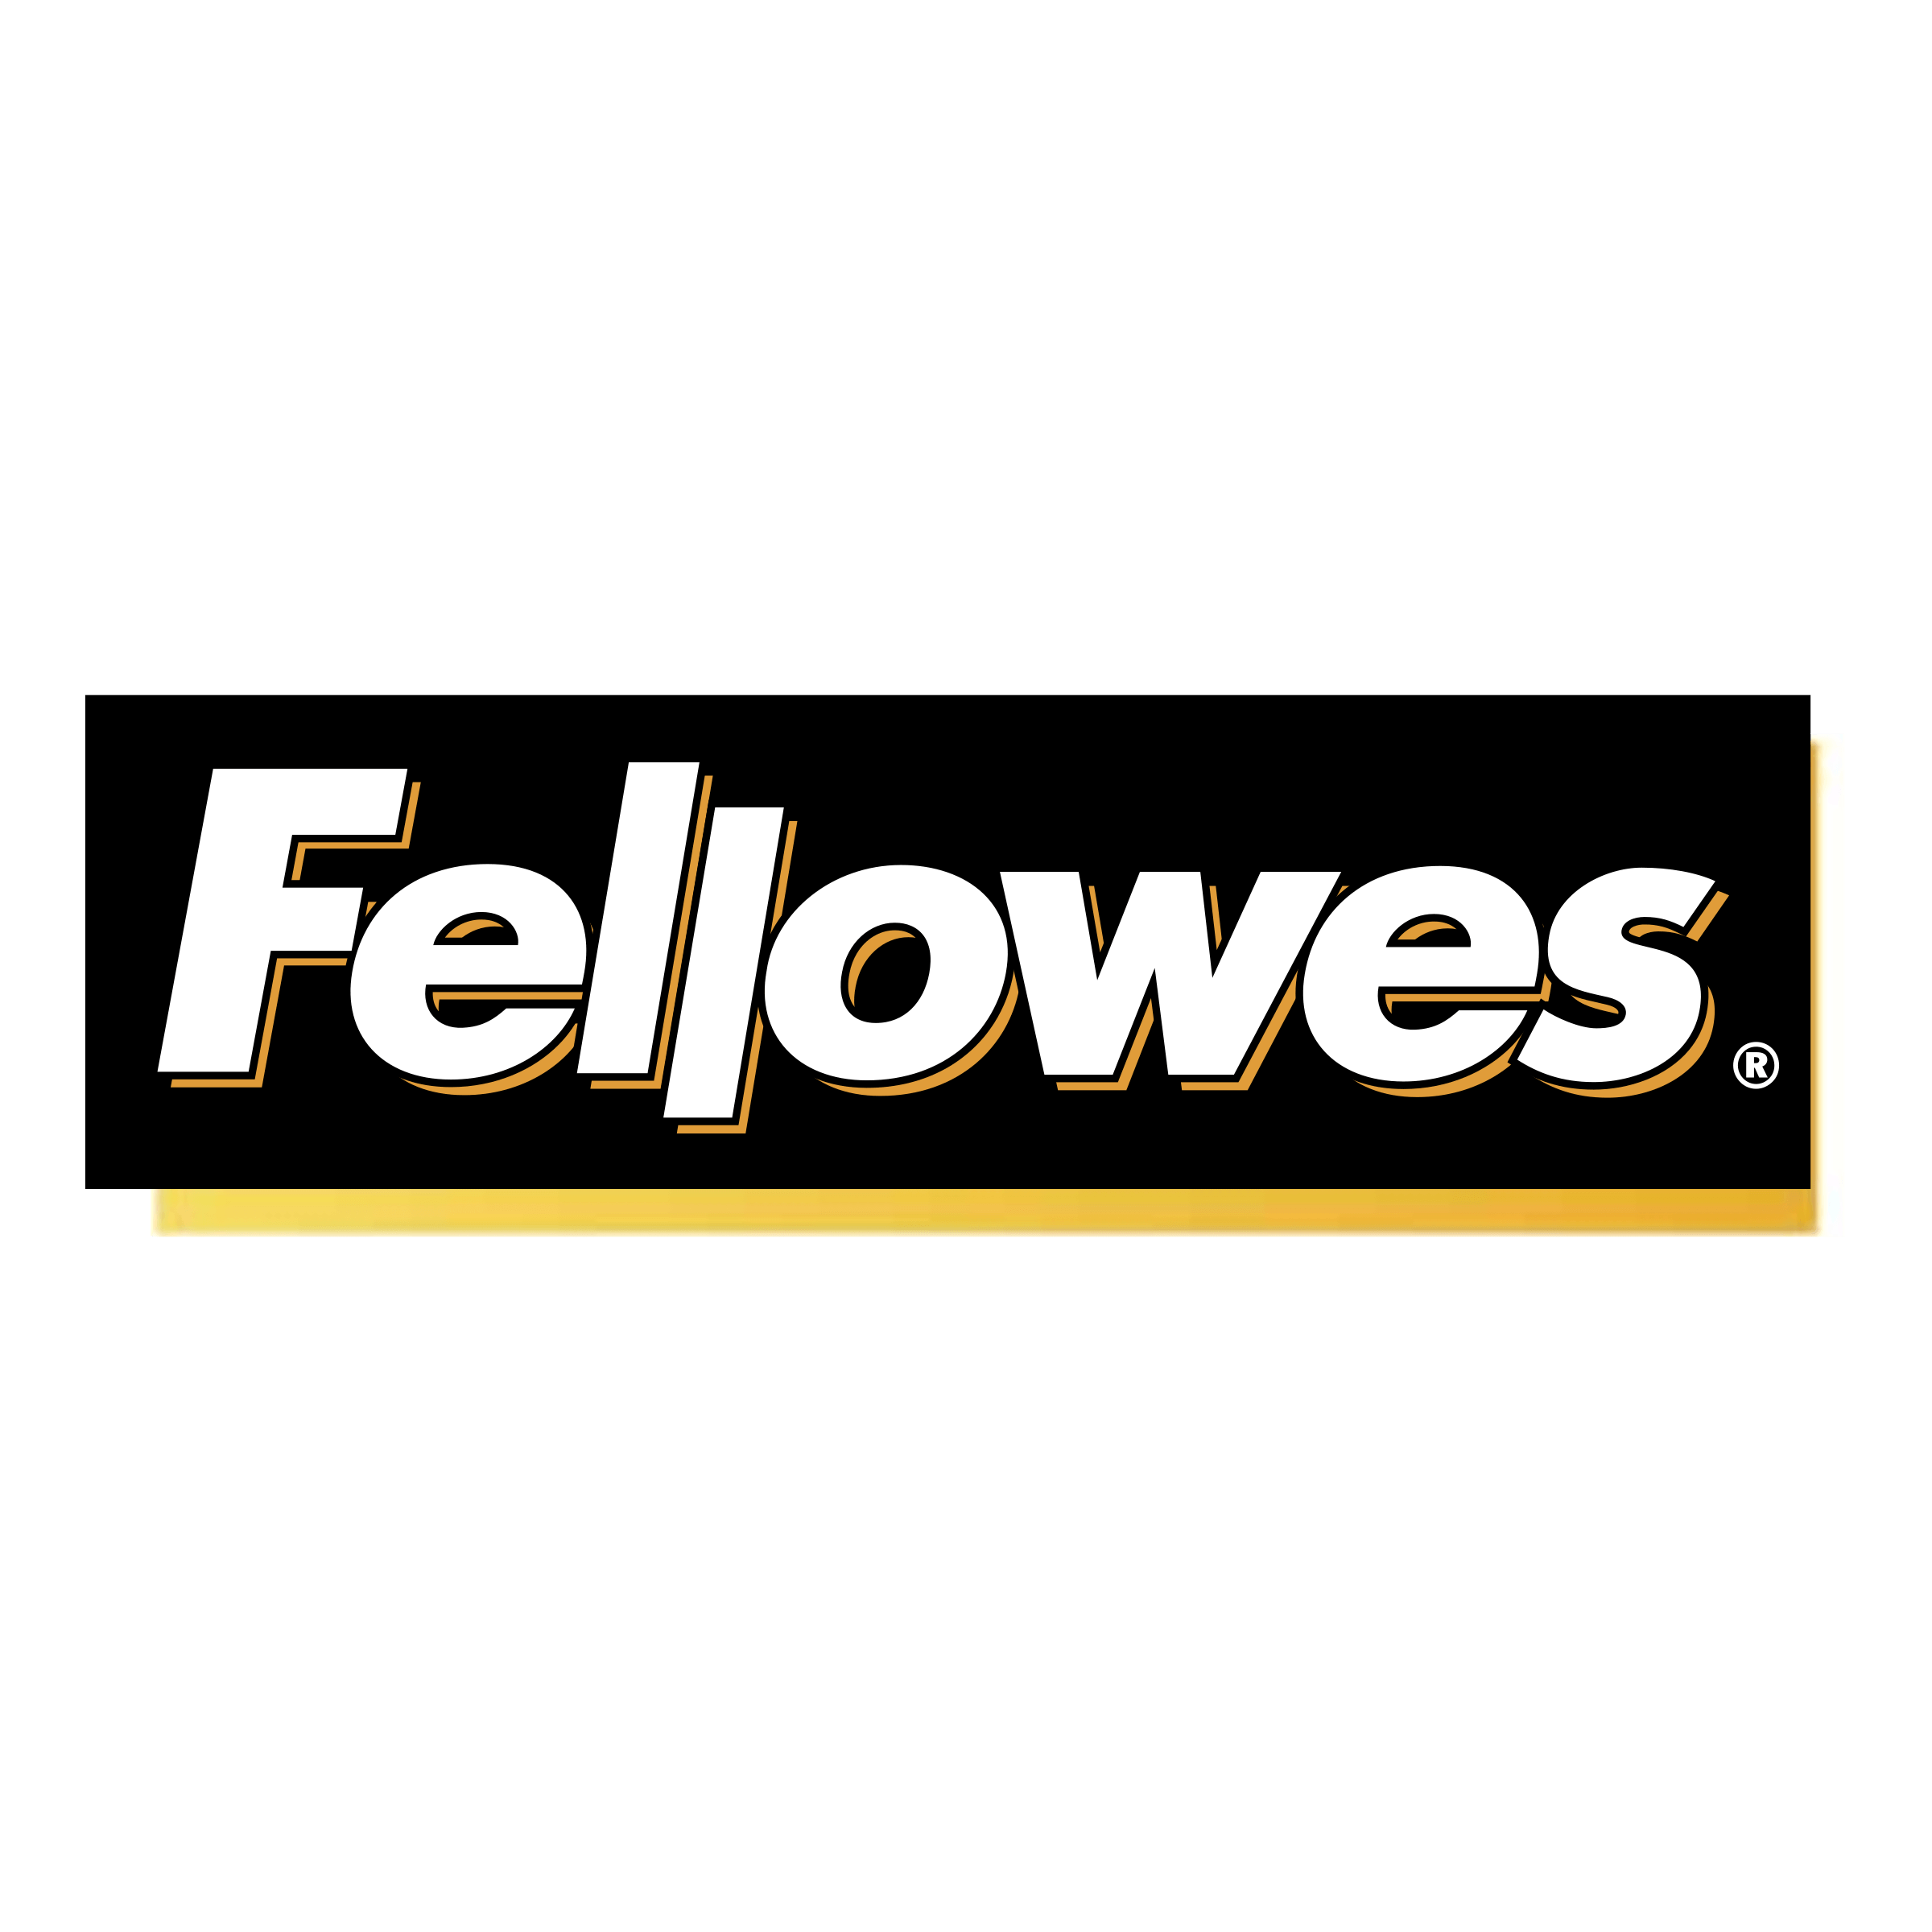 Fellowes Logo - Fellowes Logo PNG Transparent & SVG Vector - Freebie Supply